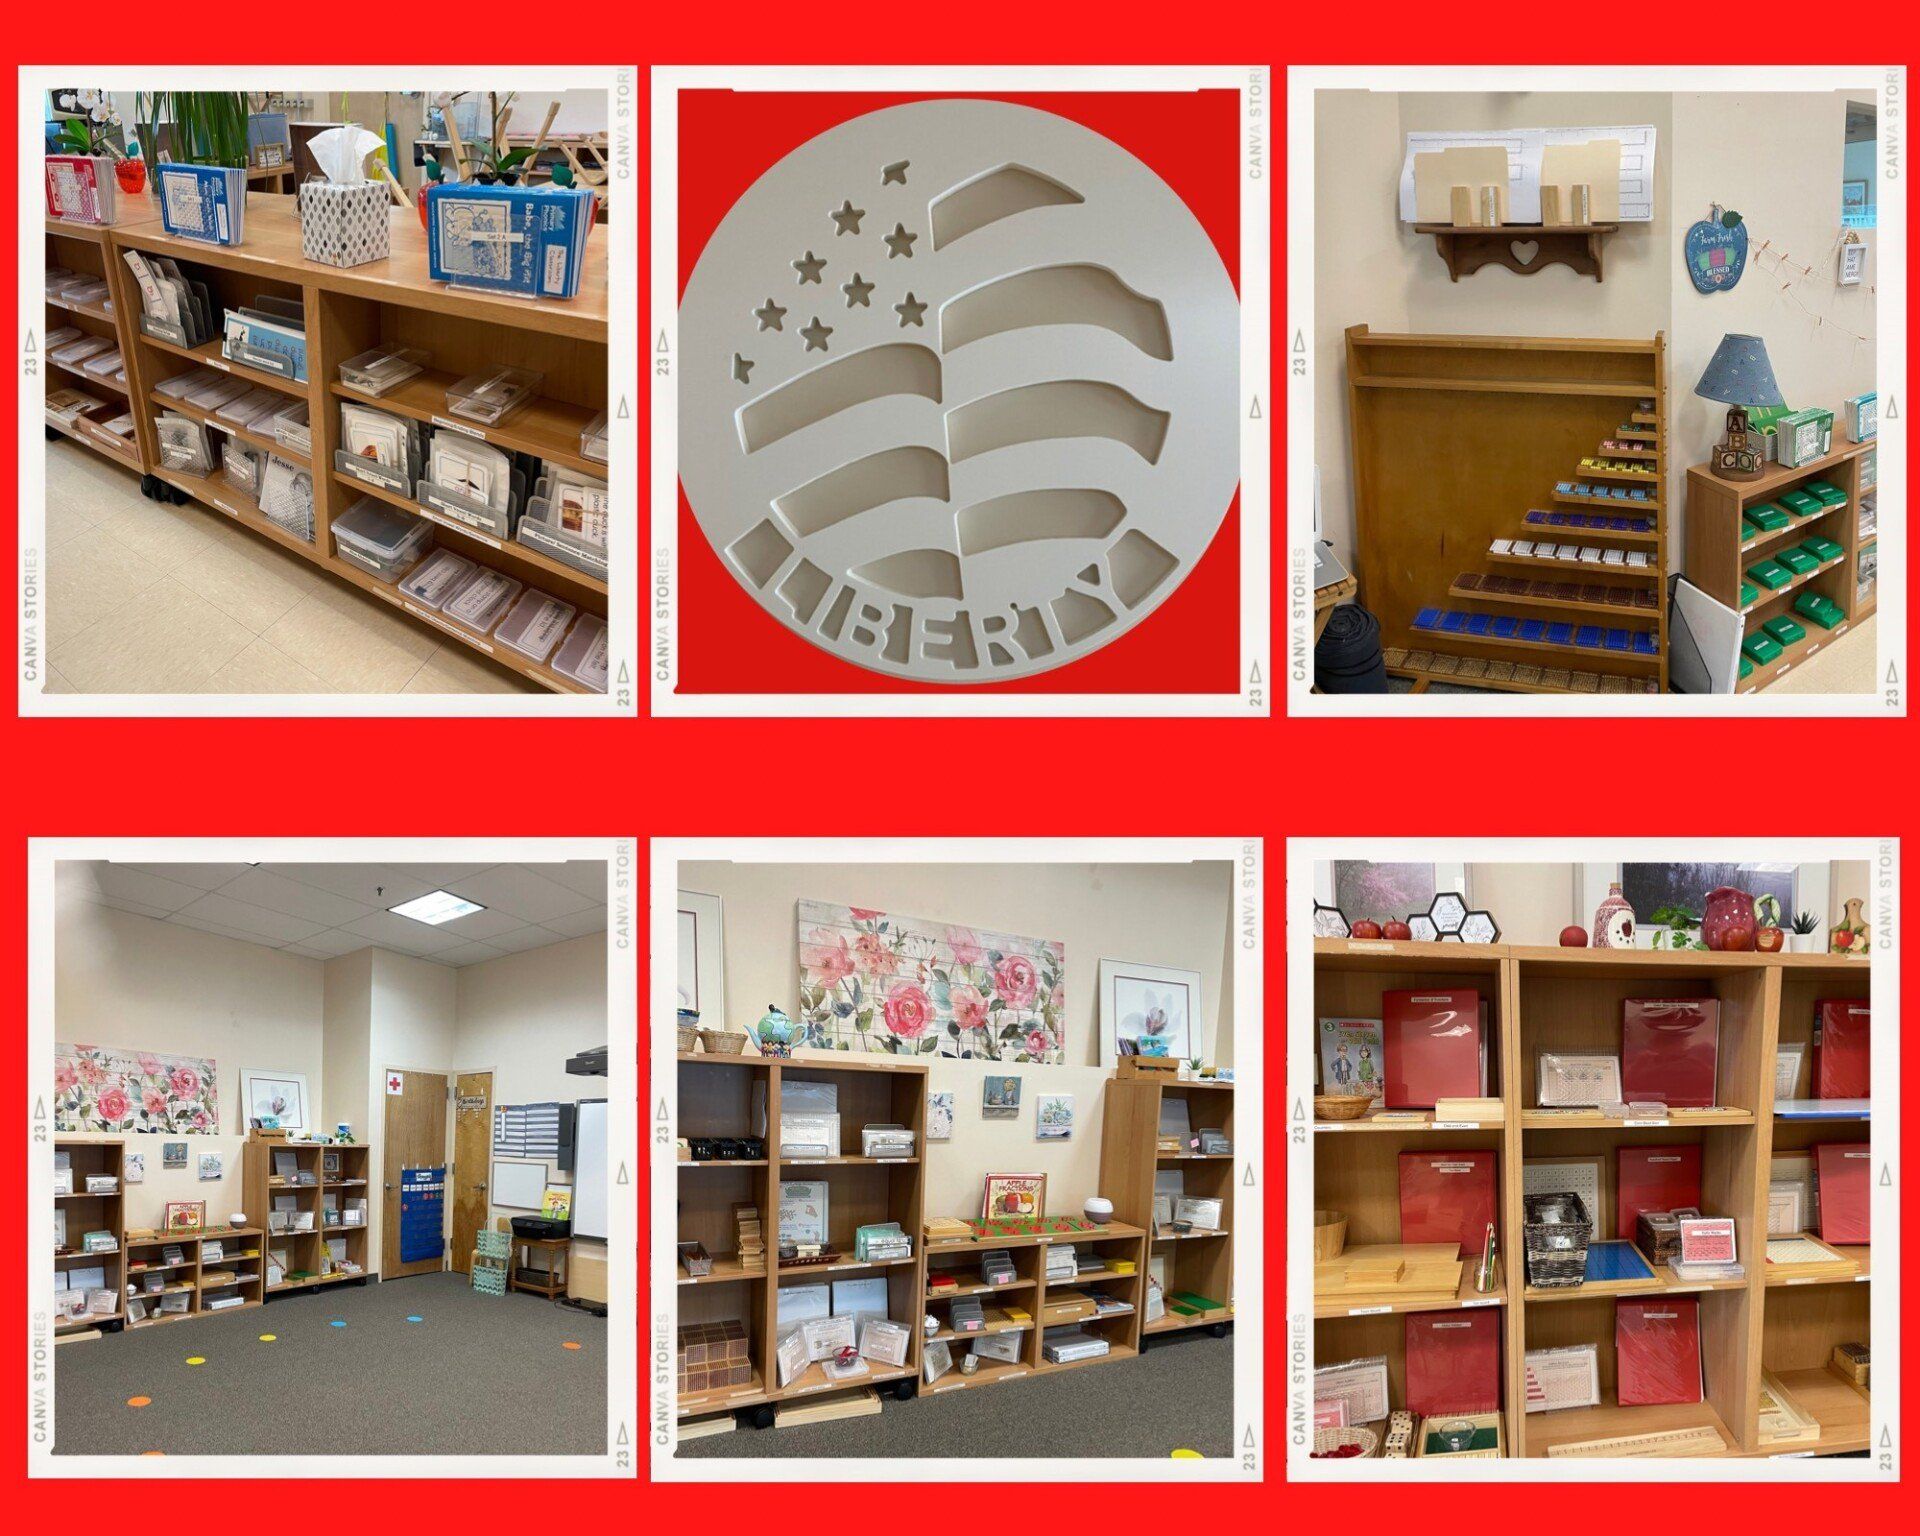 Ridgewood Montessori School's lower elementary language work space